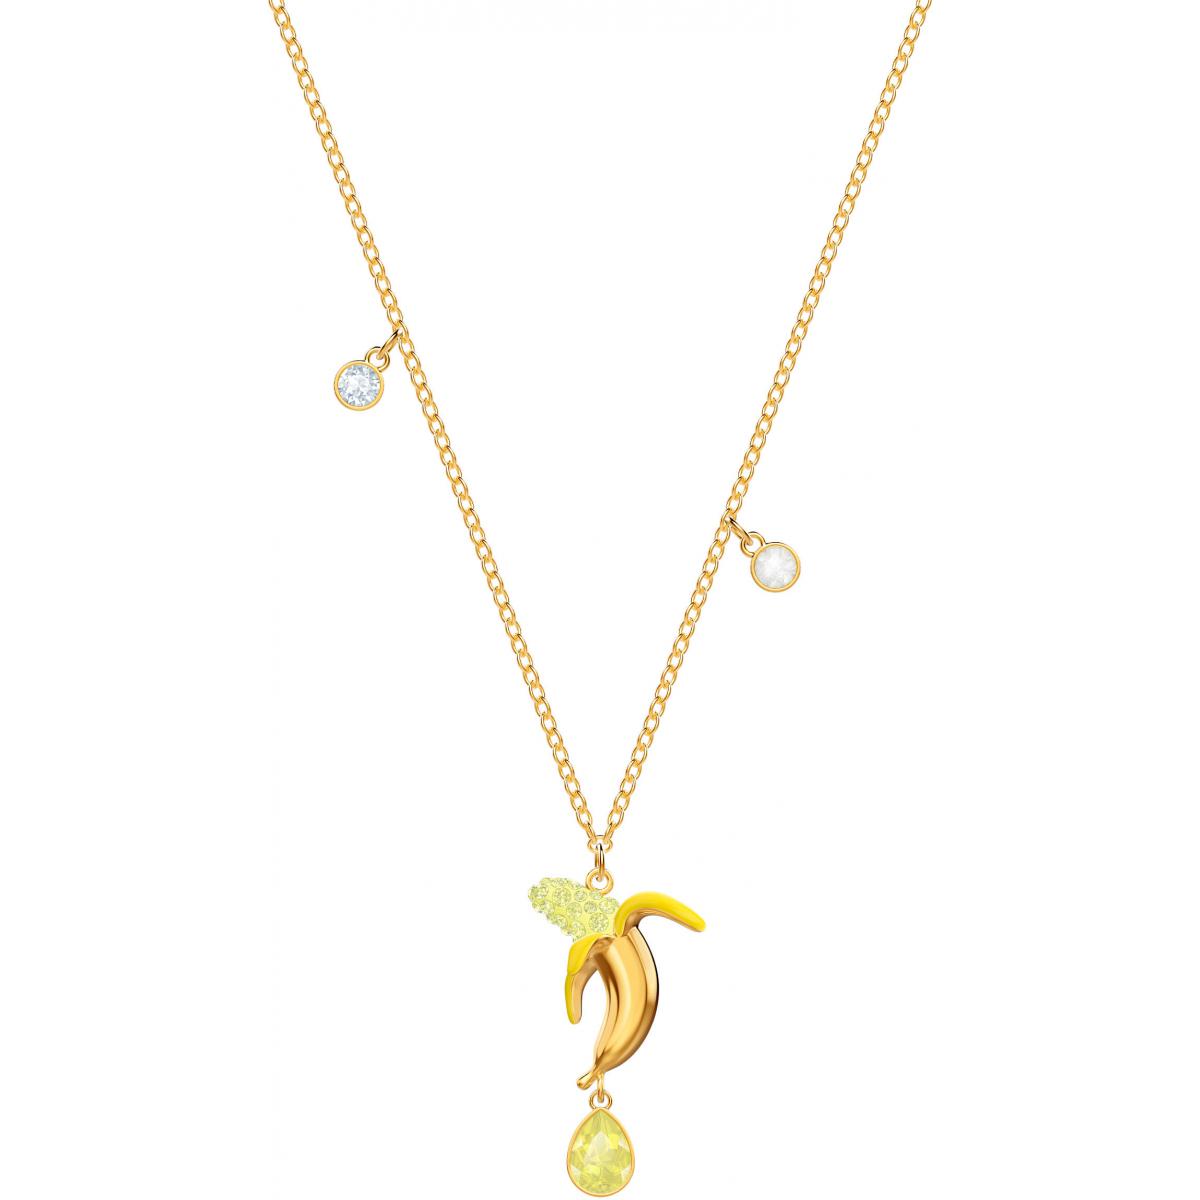 Promo : Collier et pendentif Swarovski 5457504 - Collier et pendentif Banane Femme